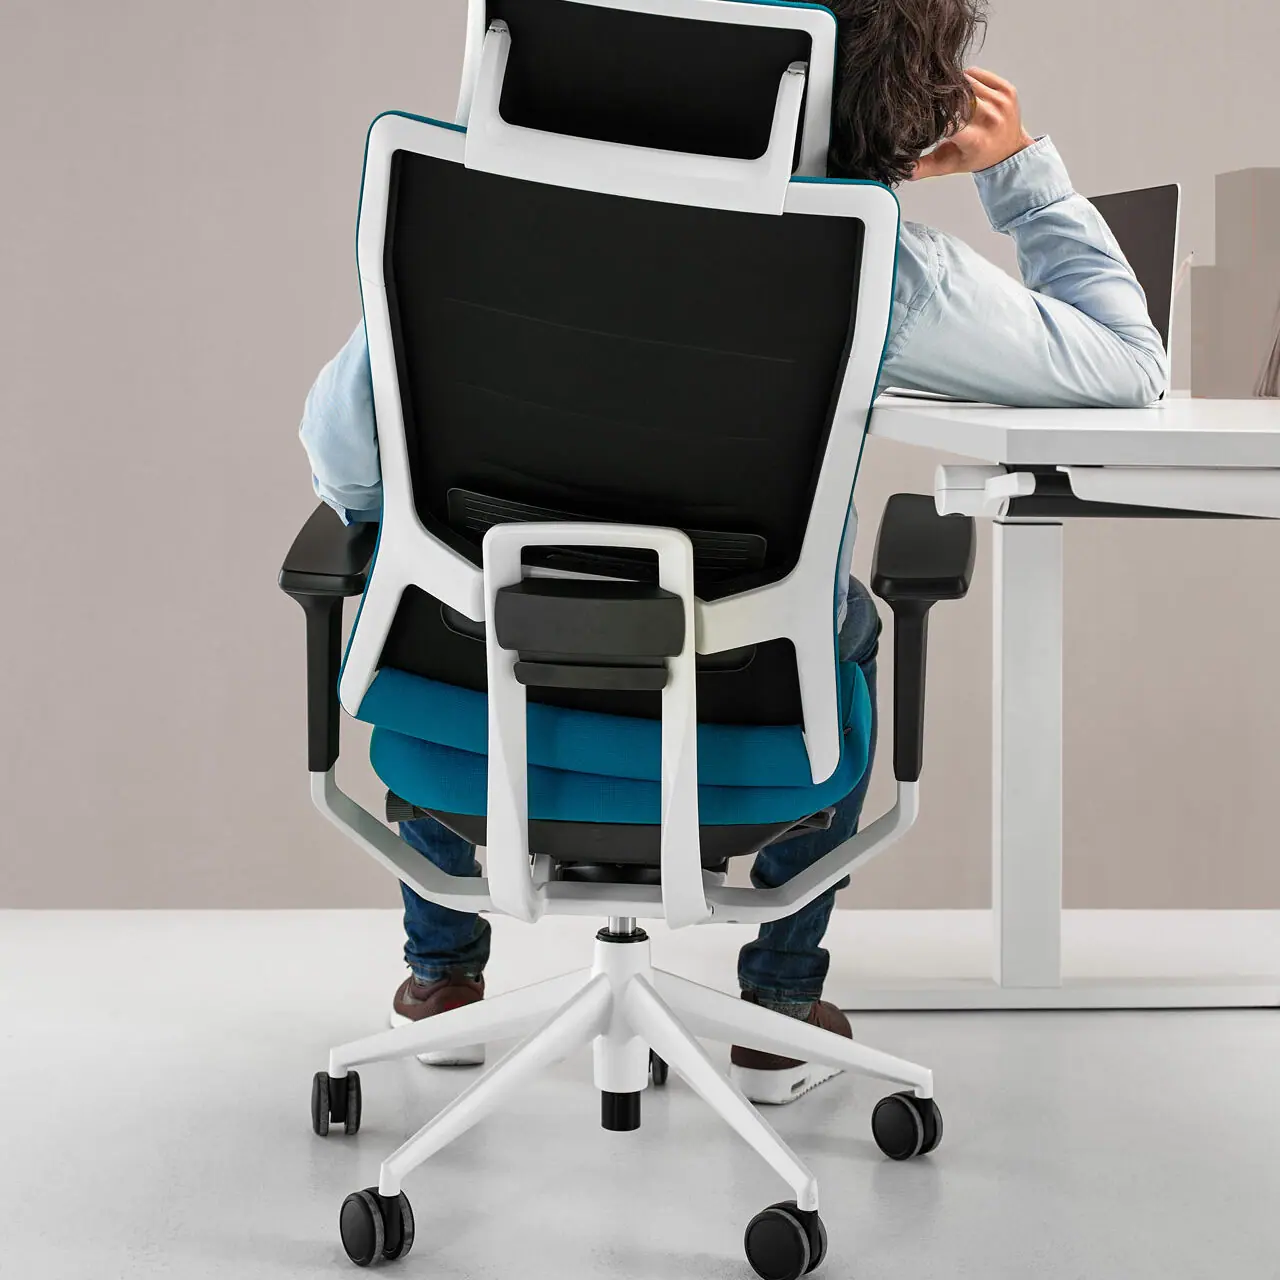 actiu-tnk-flex-office-chair-7-aspect-ratio-100-100-3